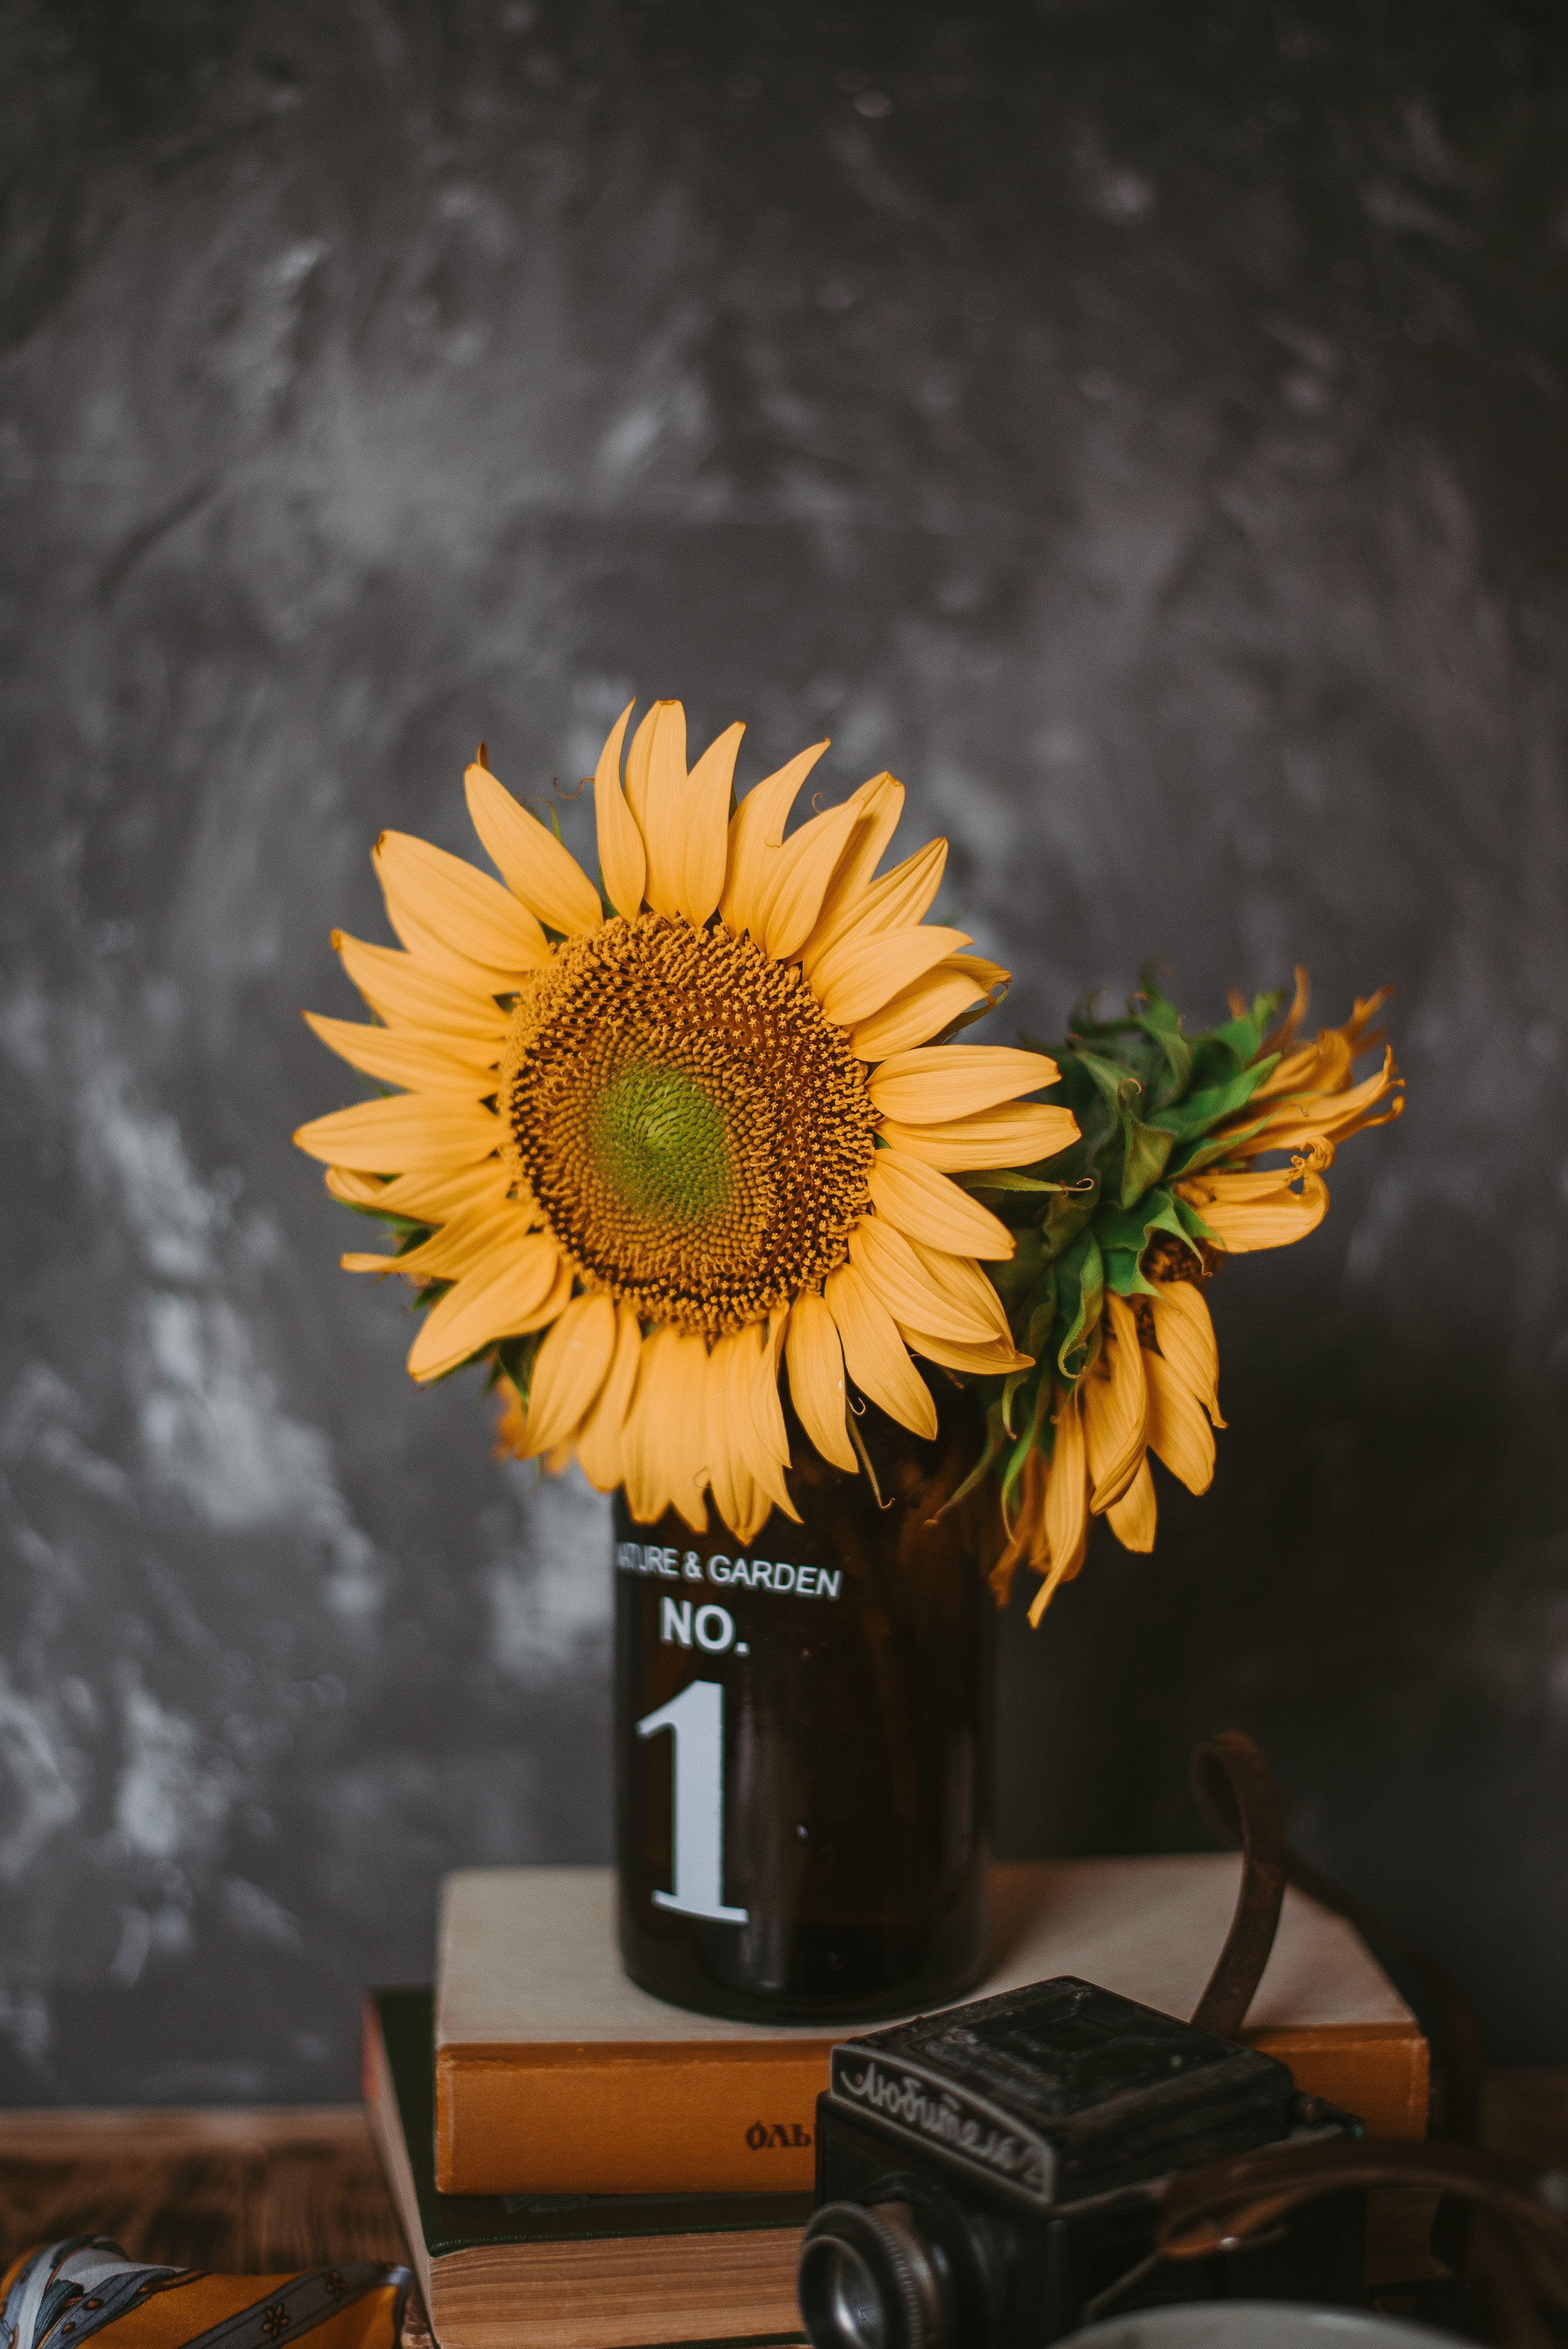 sunflowers, books, flowers, miscellanea, miscellaneous, vase, camera wallpaper for mobile